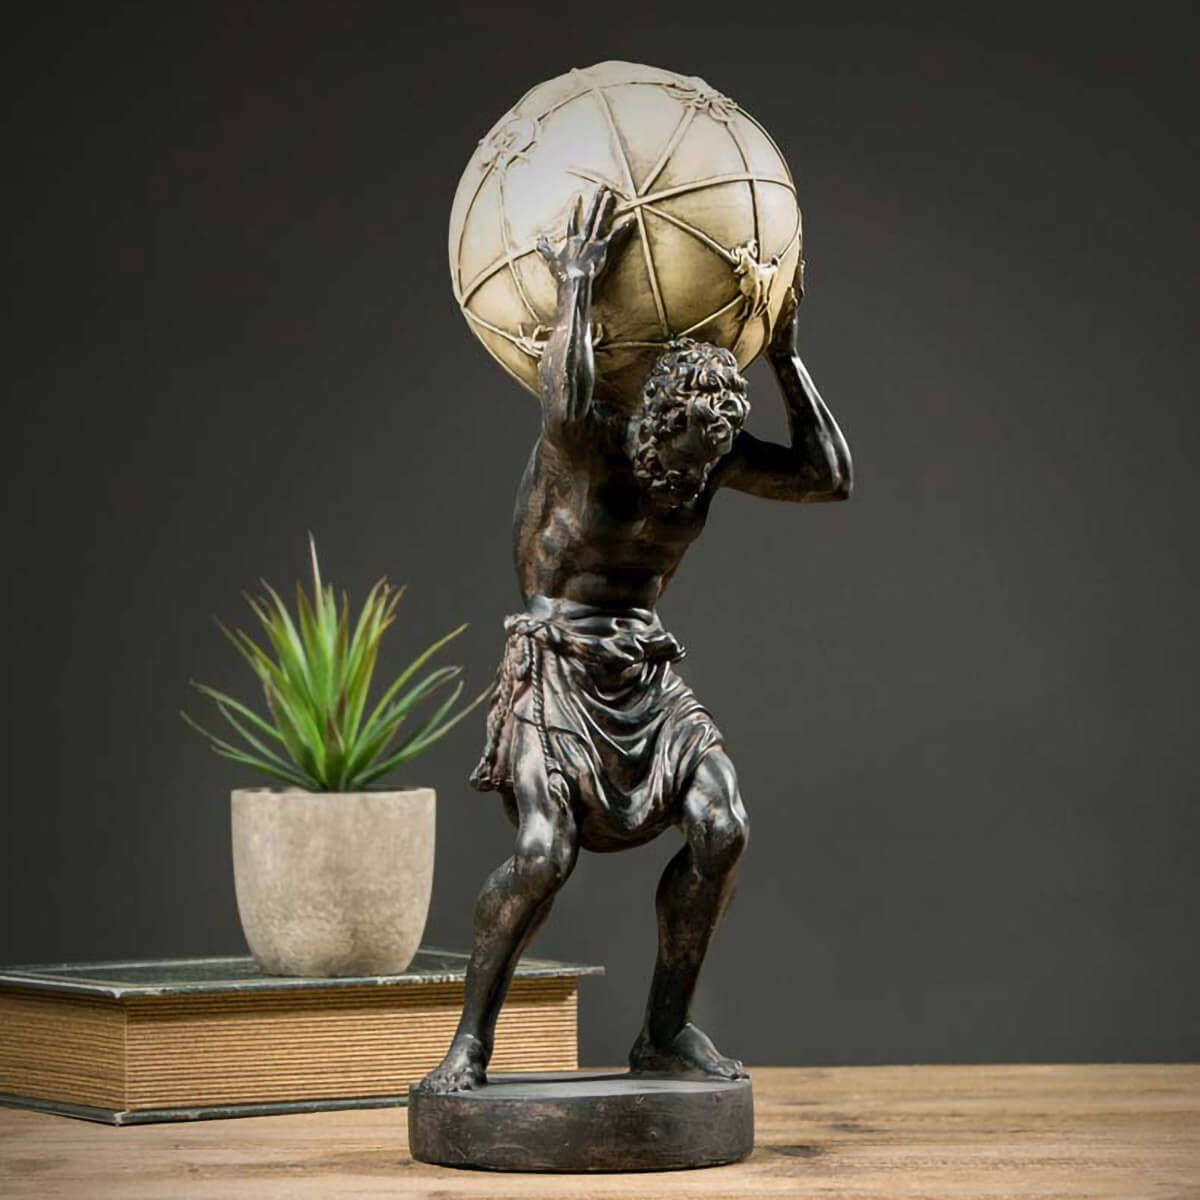 Mystical world sculpture with Atlas figure